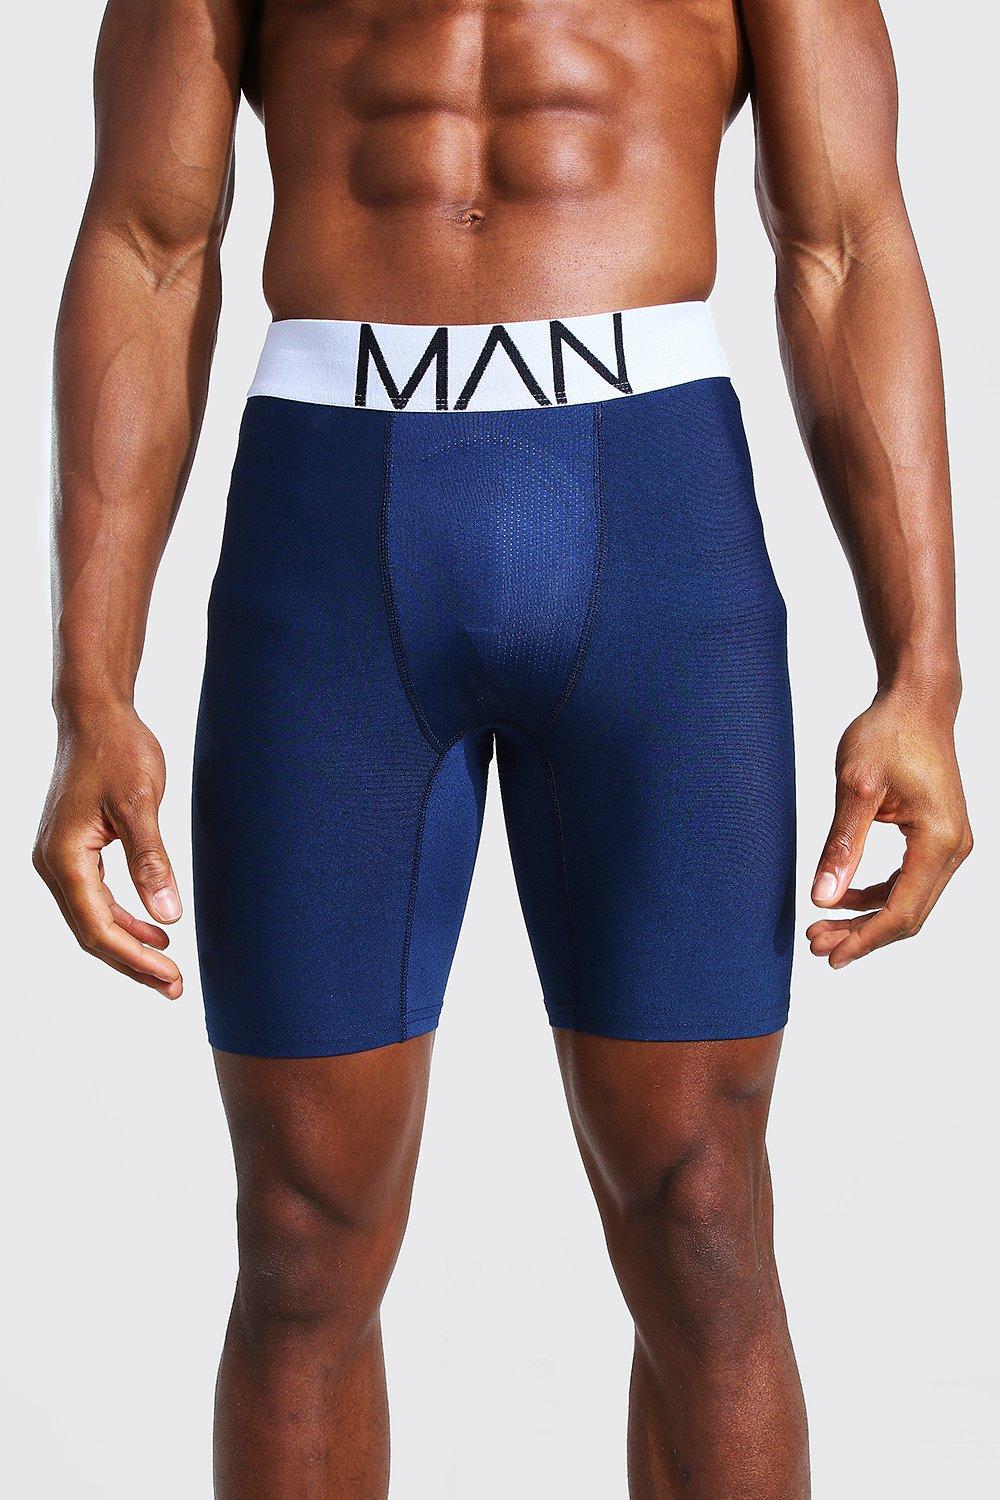 https://media.boohoo.com/i/boohoo/mzz02544_navy_xl_1/male-navy-man-dash-long-length-sports-boxer